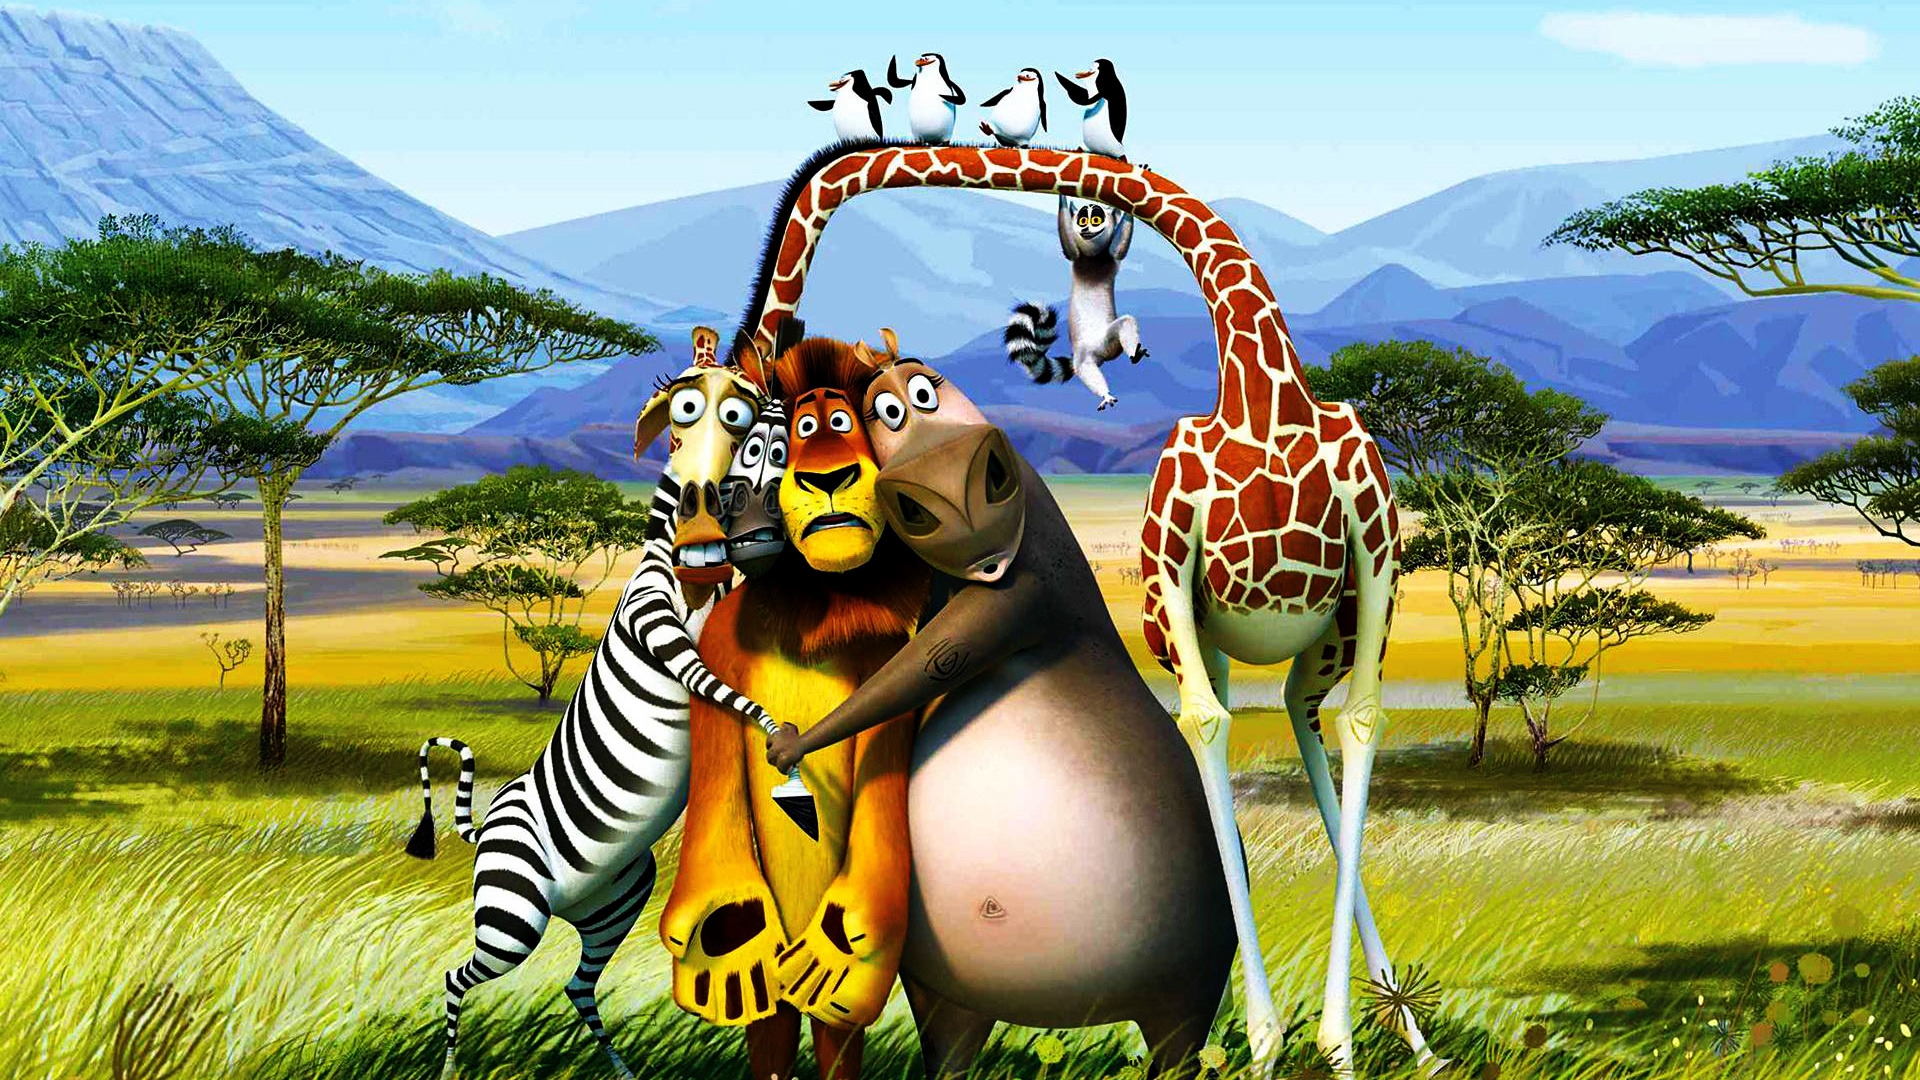 Madagascar 3 Poster for 1920 x 1080 HDTV 1080p resolution